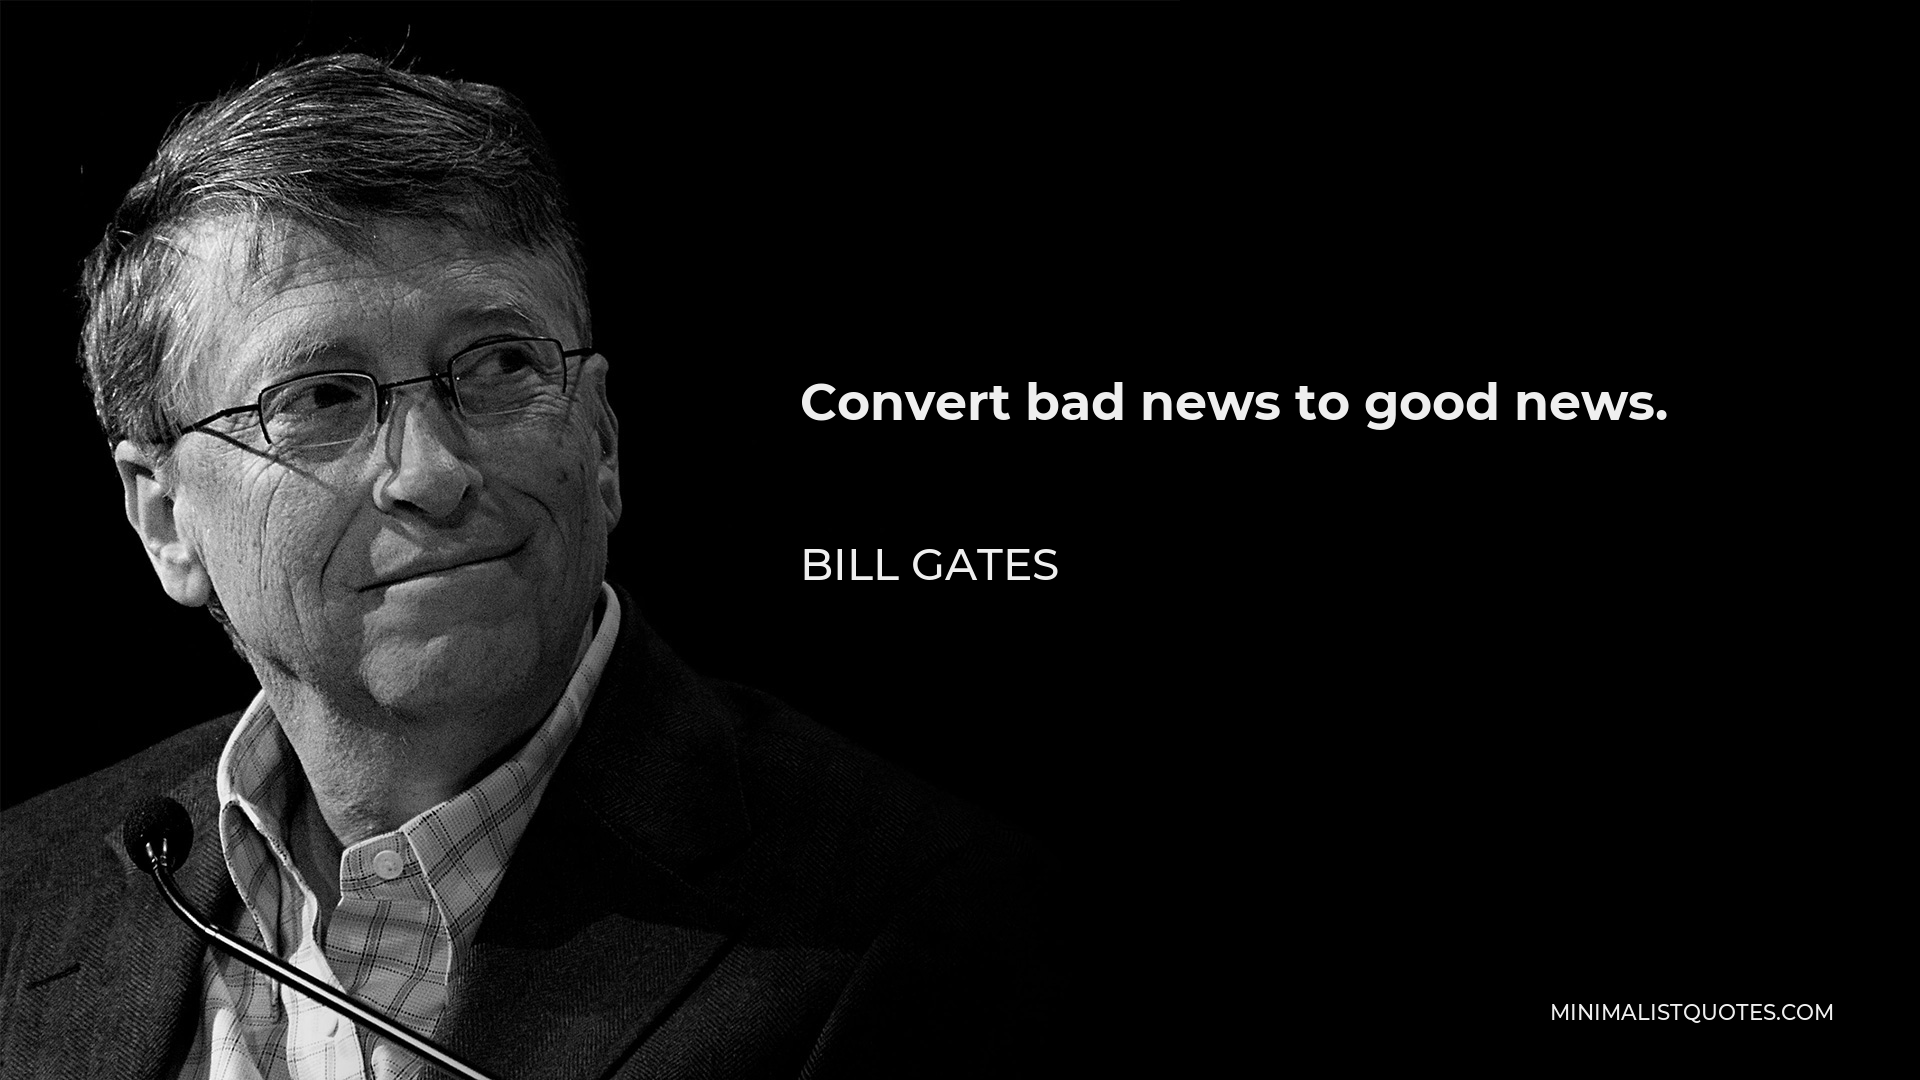 Bill Gates Quote - Convert bad news to good news.